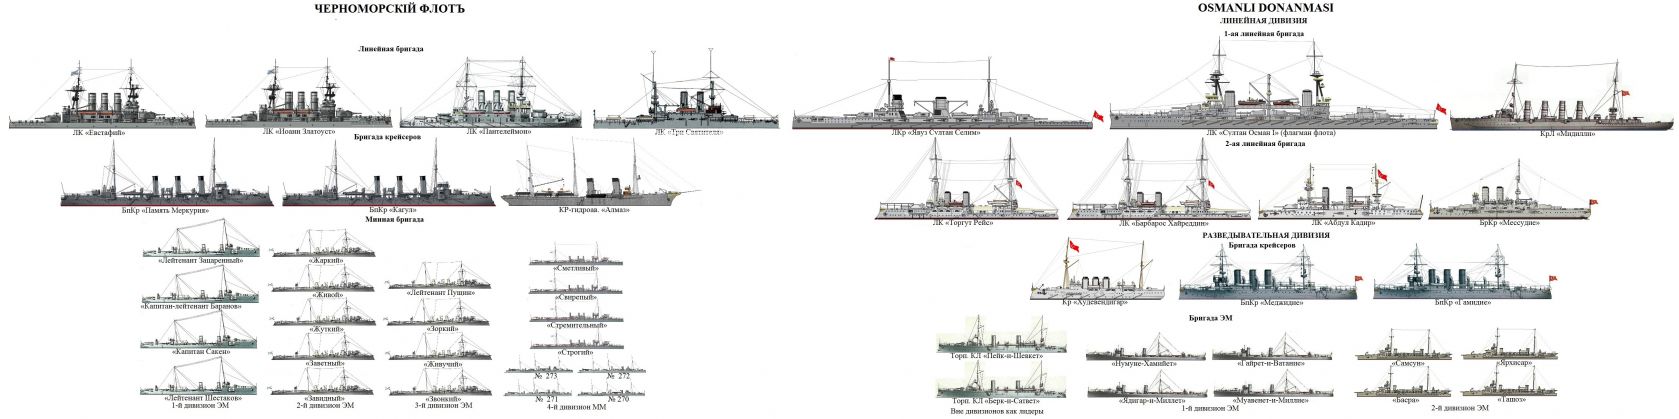 Черноморскiй флотъ vs Osmanli donanmasi